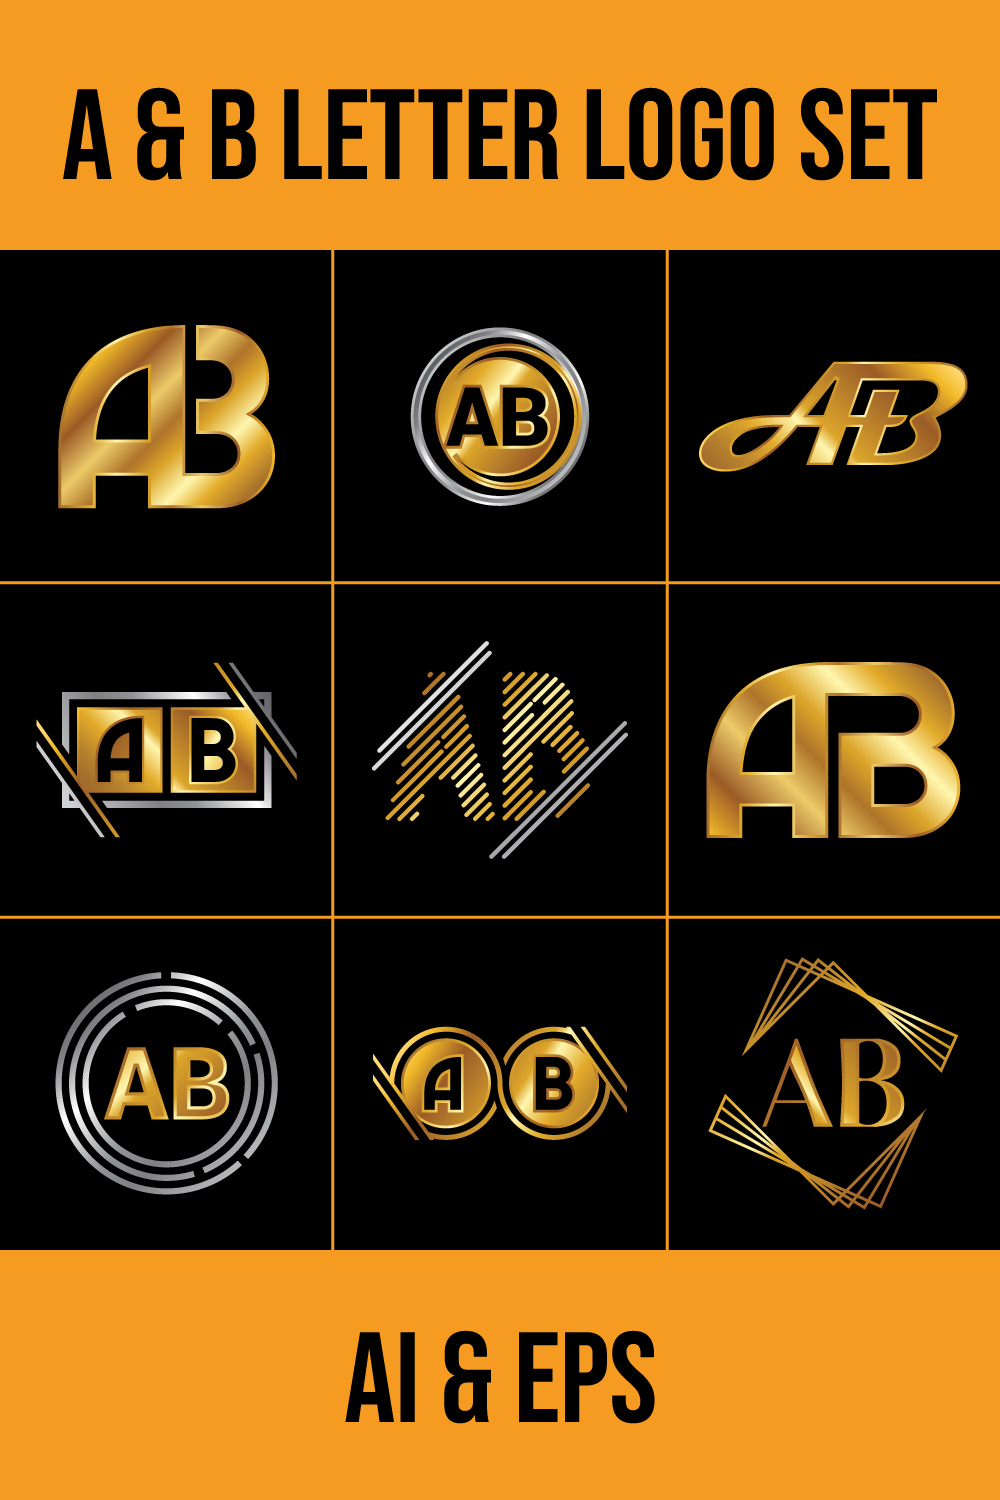 A B Initial Letter Logo Design pinterest image.